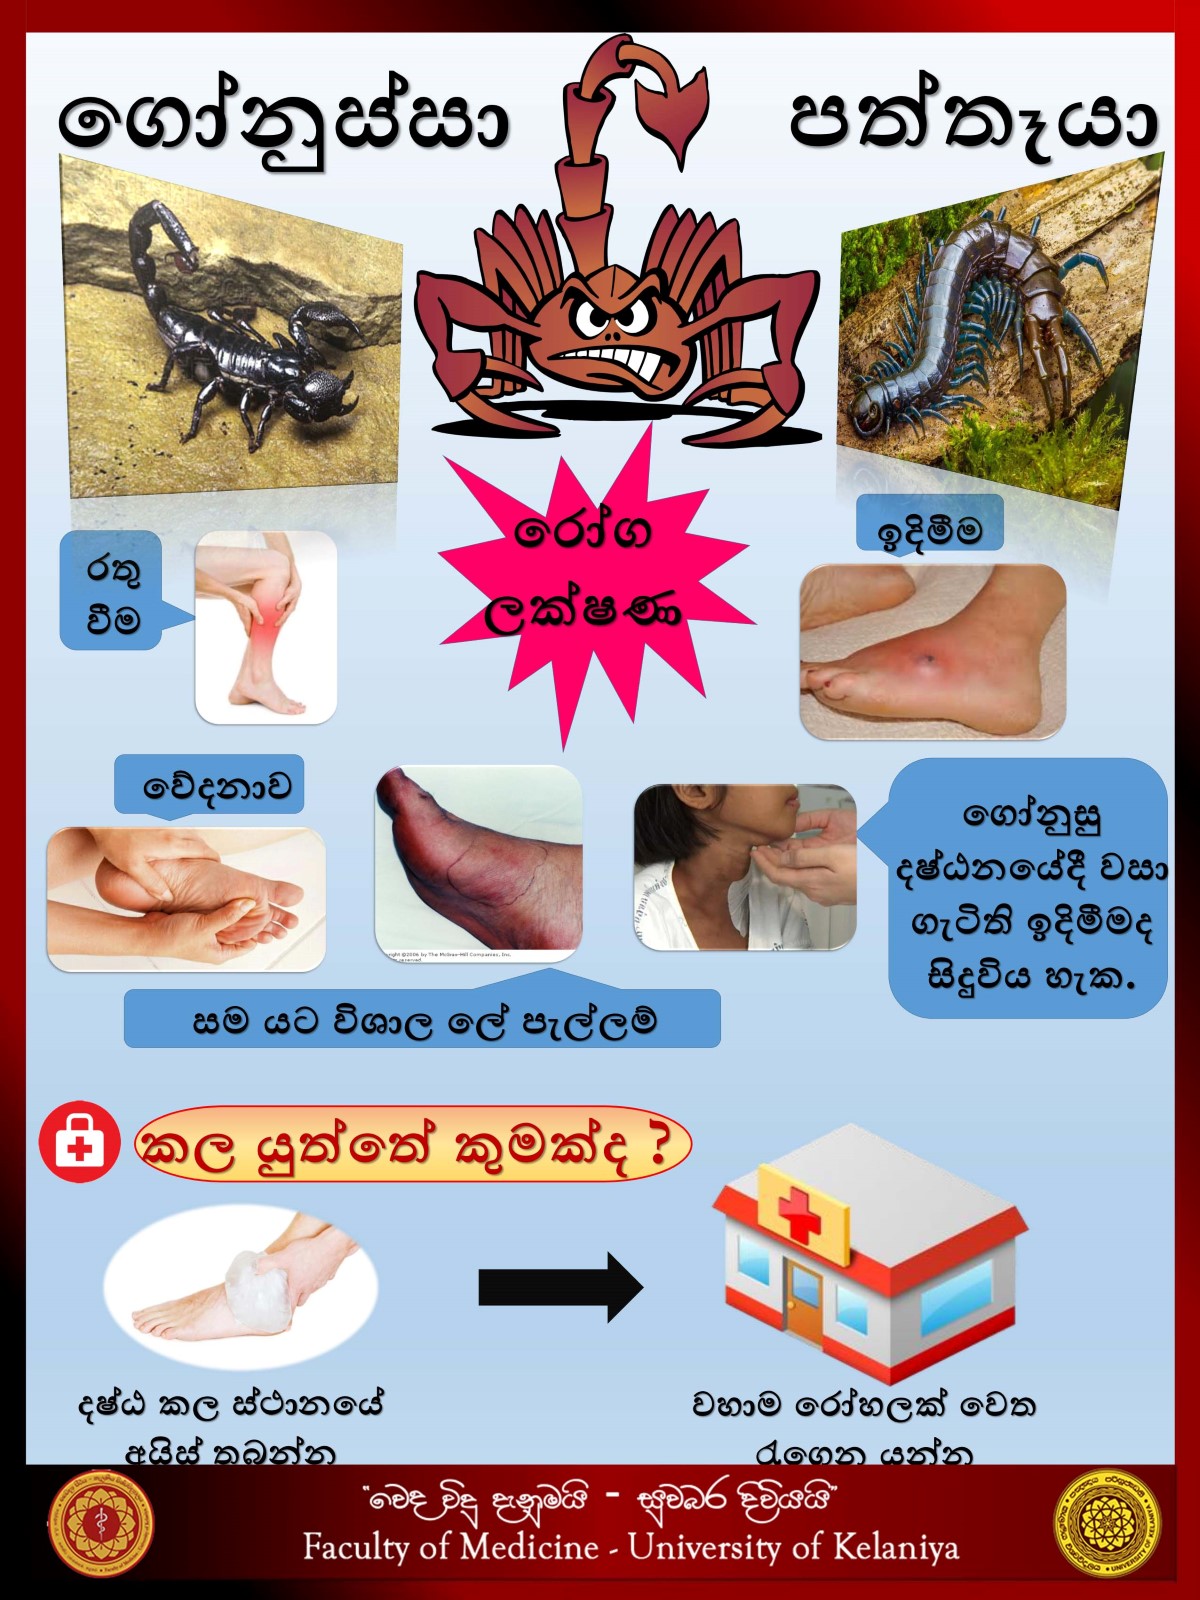 http://medicine.kln.ac.lk/vedavidudanuma/images/gallery/Trauma_Zone/Toxicology/scorpion-centeped_001.jpg